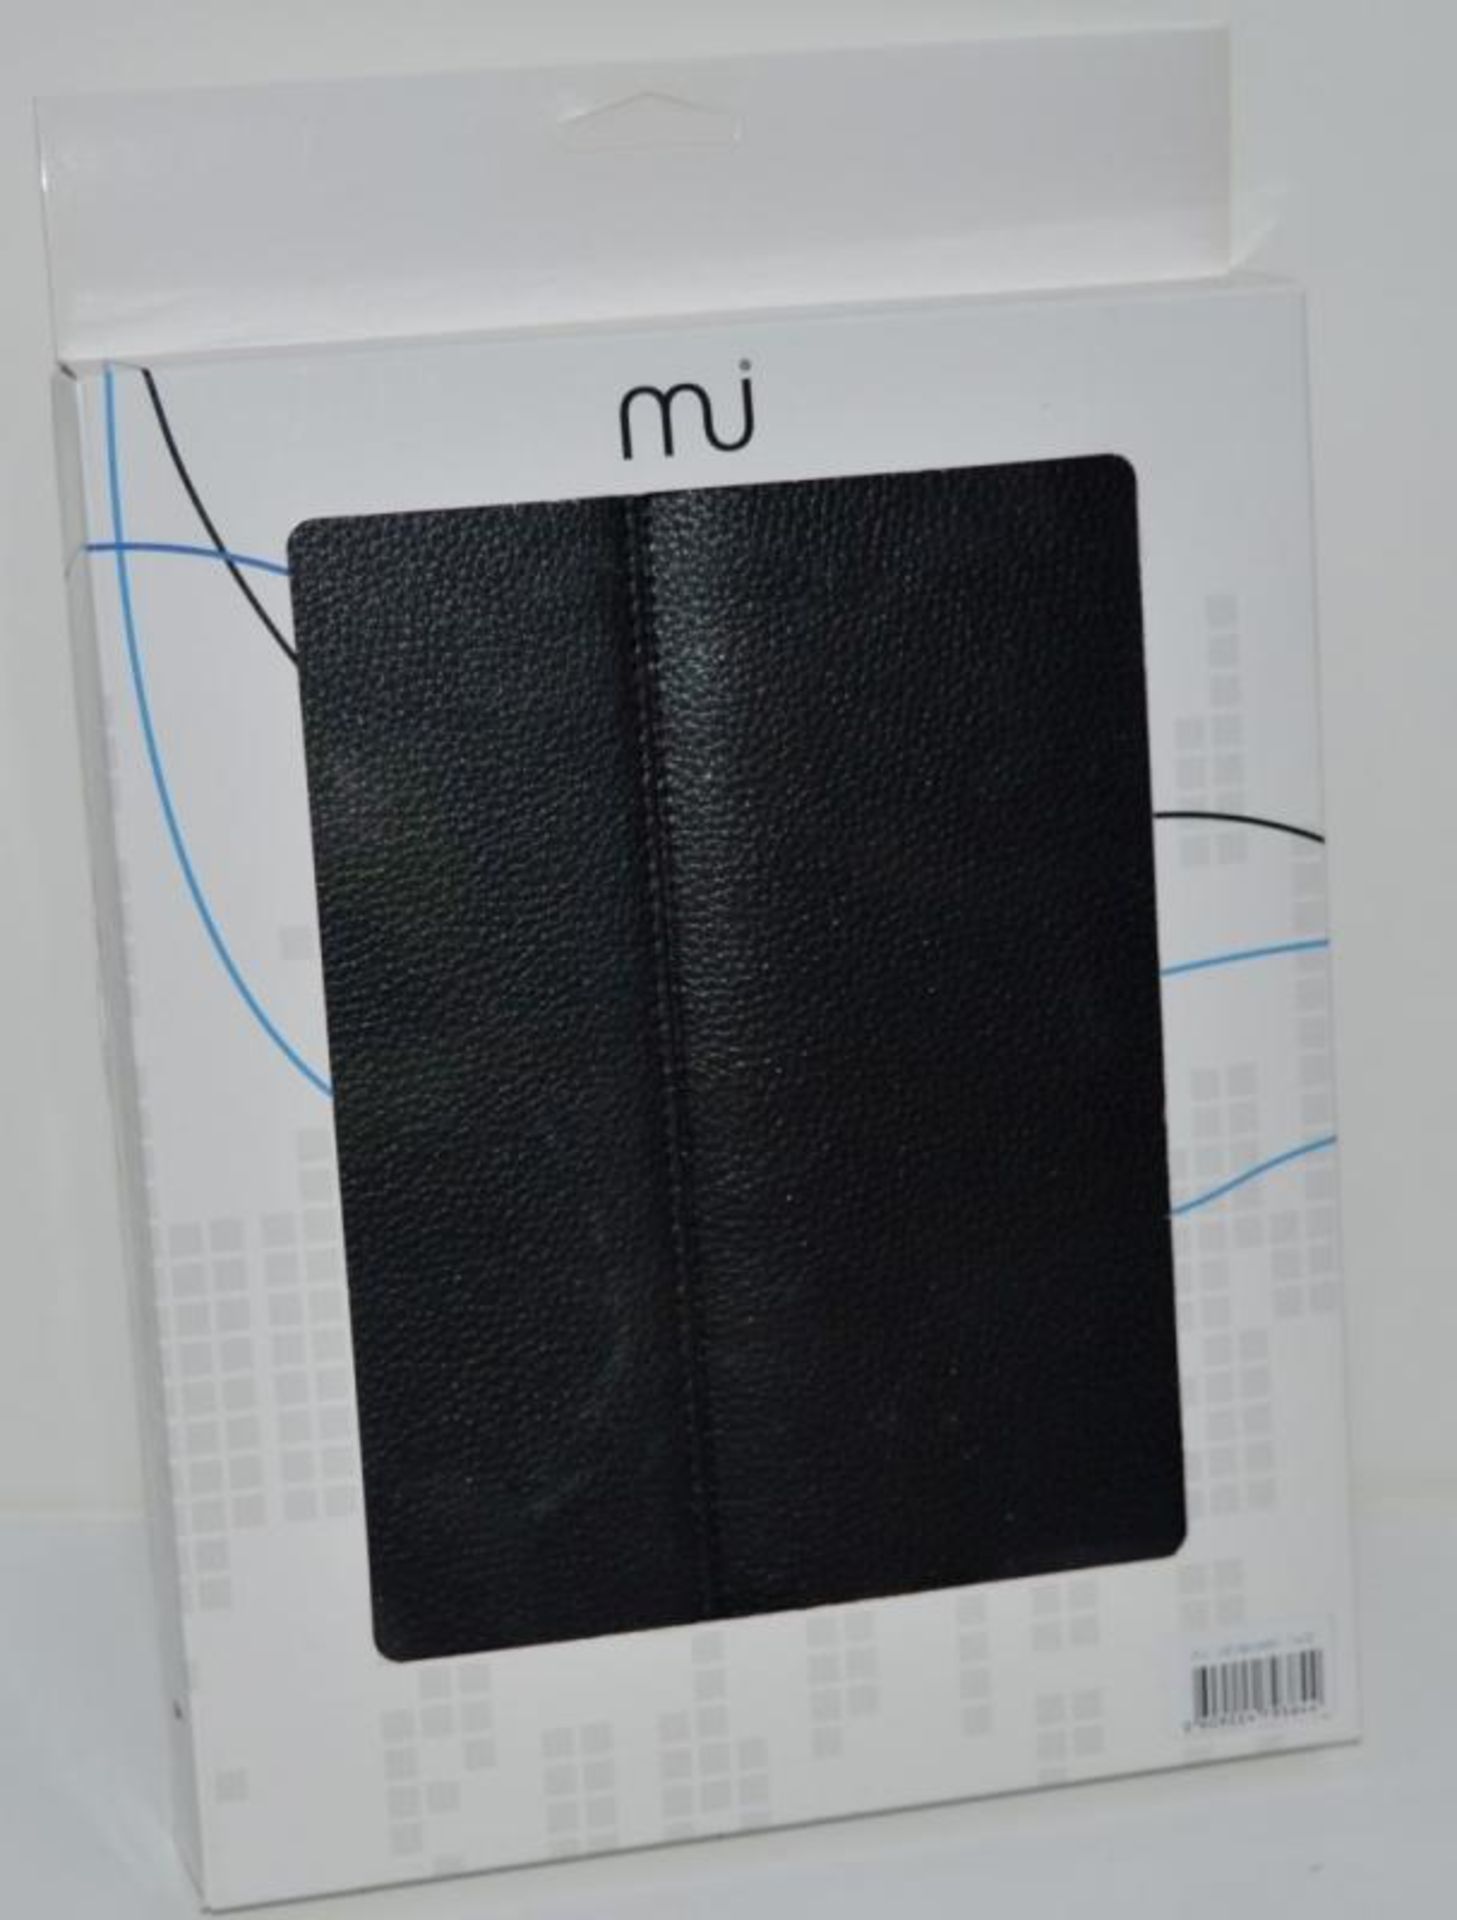 1 x Mi PU Leather IPAD CASE With Integrated Bluetooth 2.0 Keyboard - Wireless Keyboard, Upto 90 Hour